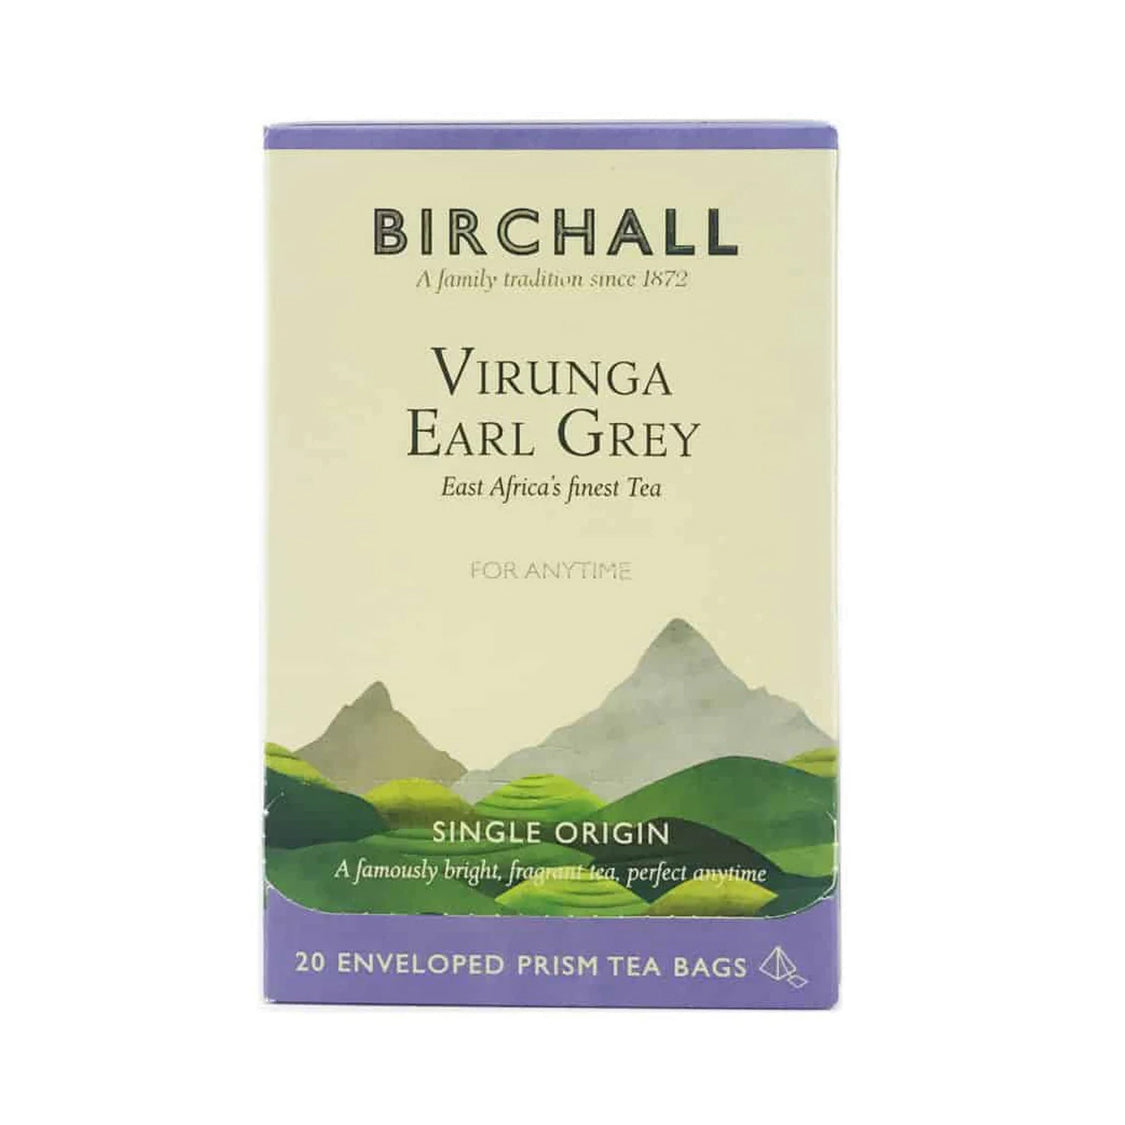 Birchall Tea Virunga Earl Grey Enveloped Prism Tea Bags x 20